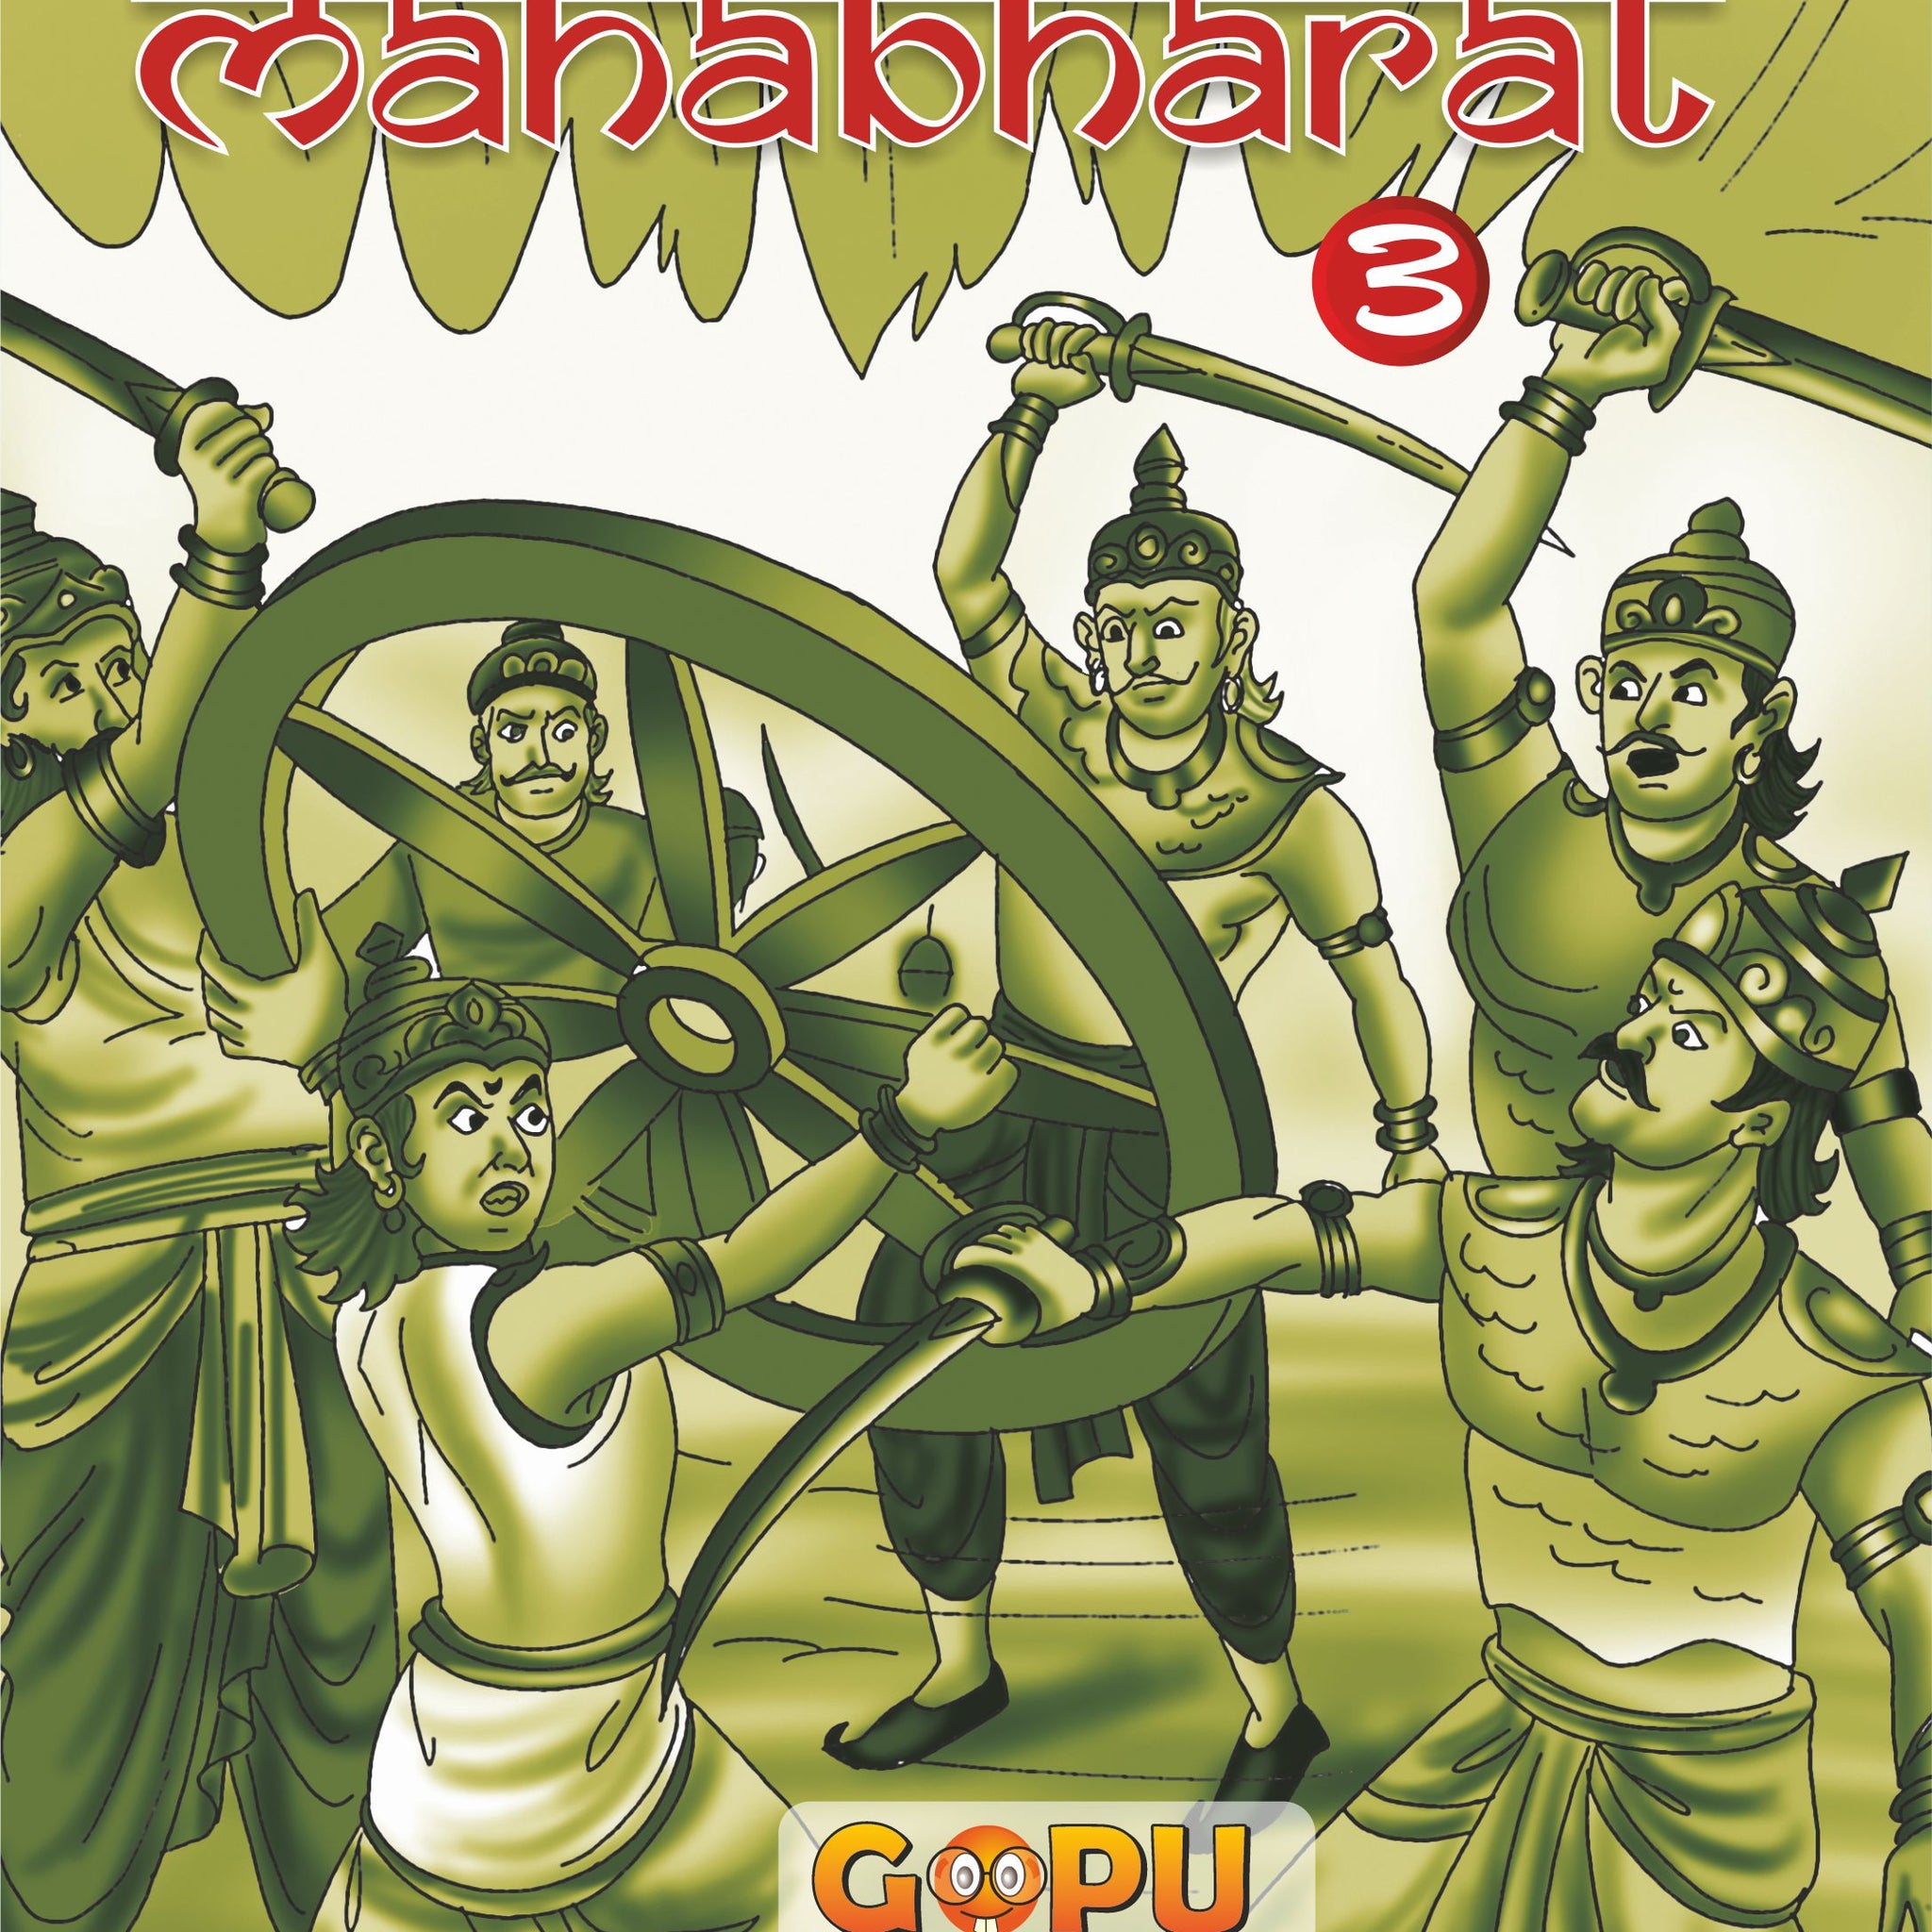 Mahabharat Vol. 3